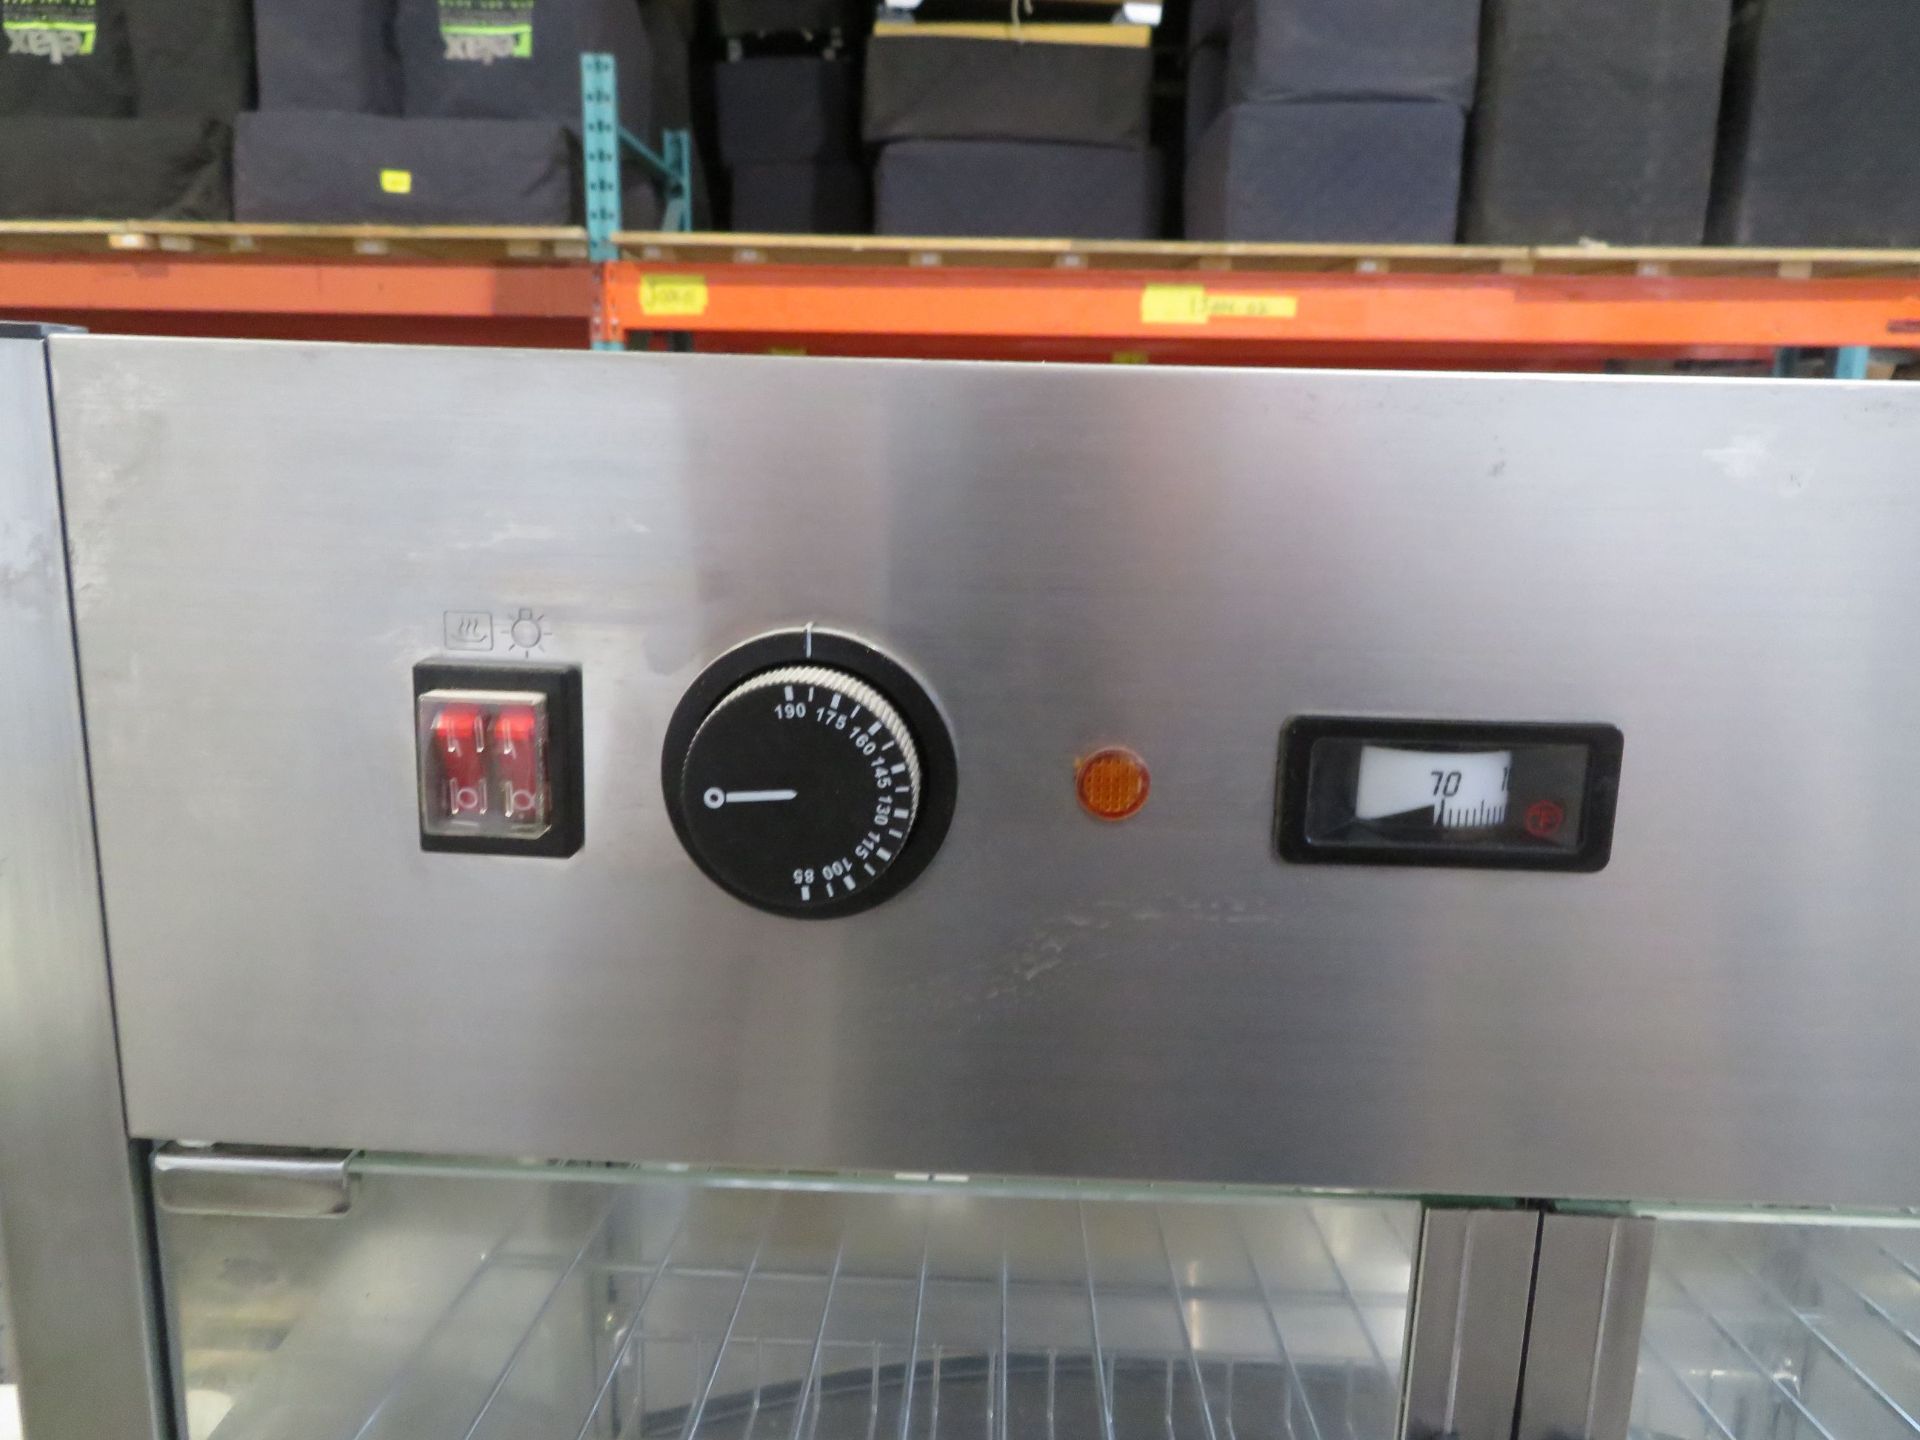 OMCAN food warmer display unit, Mod: DW-CN-0107, approx. 26"w x 17"d x 26"h - Image 4 of 5